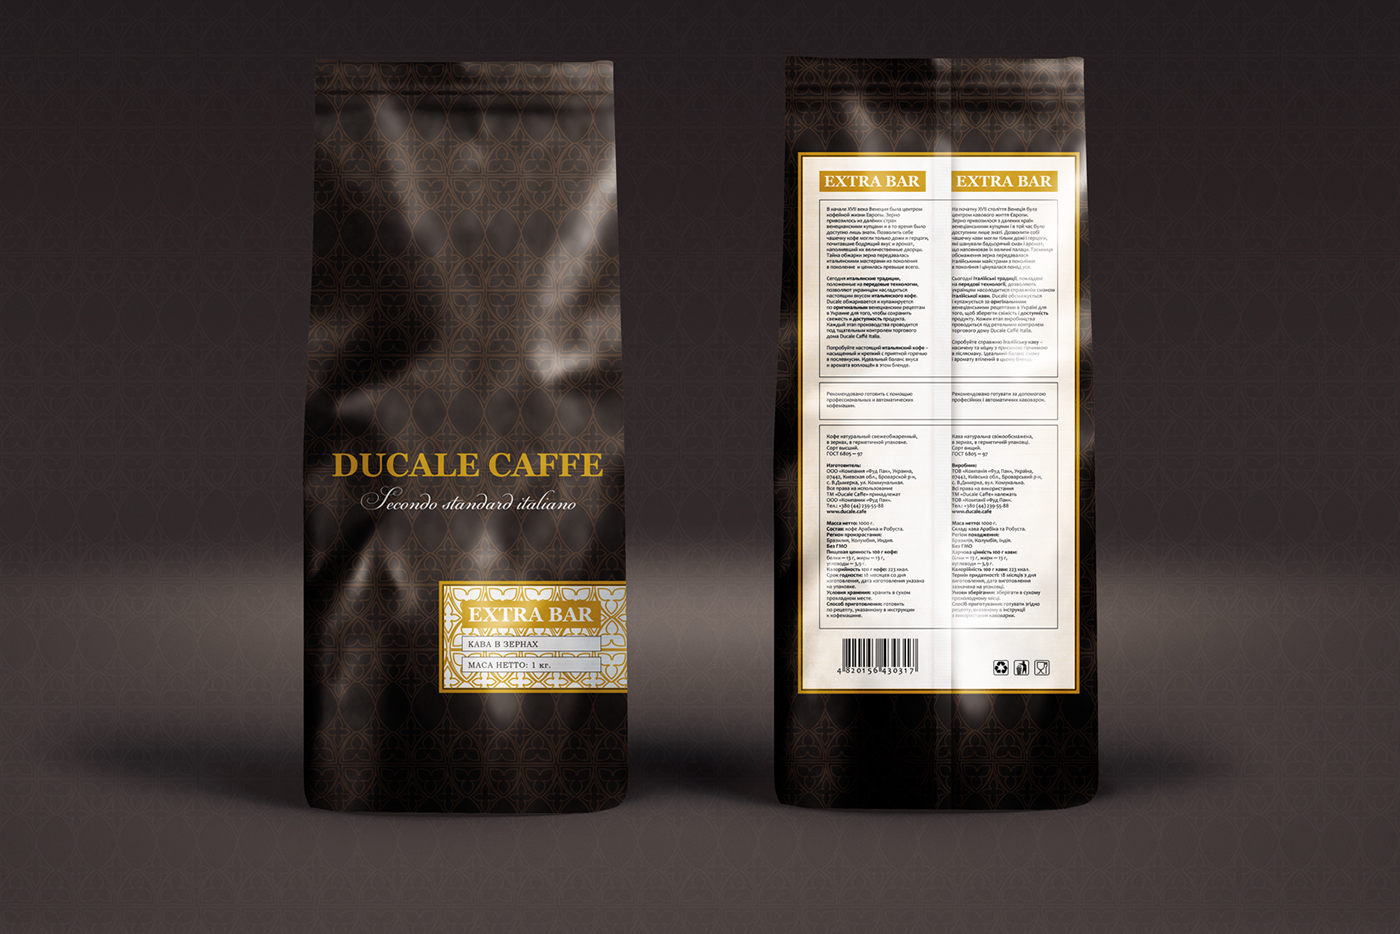 Pack package design  Packaging Development дизайн упаковки Разработка упаковки упаковка кофе Coffee ducale ducale caffe